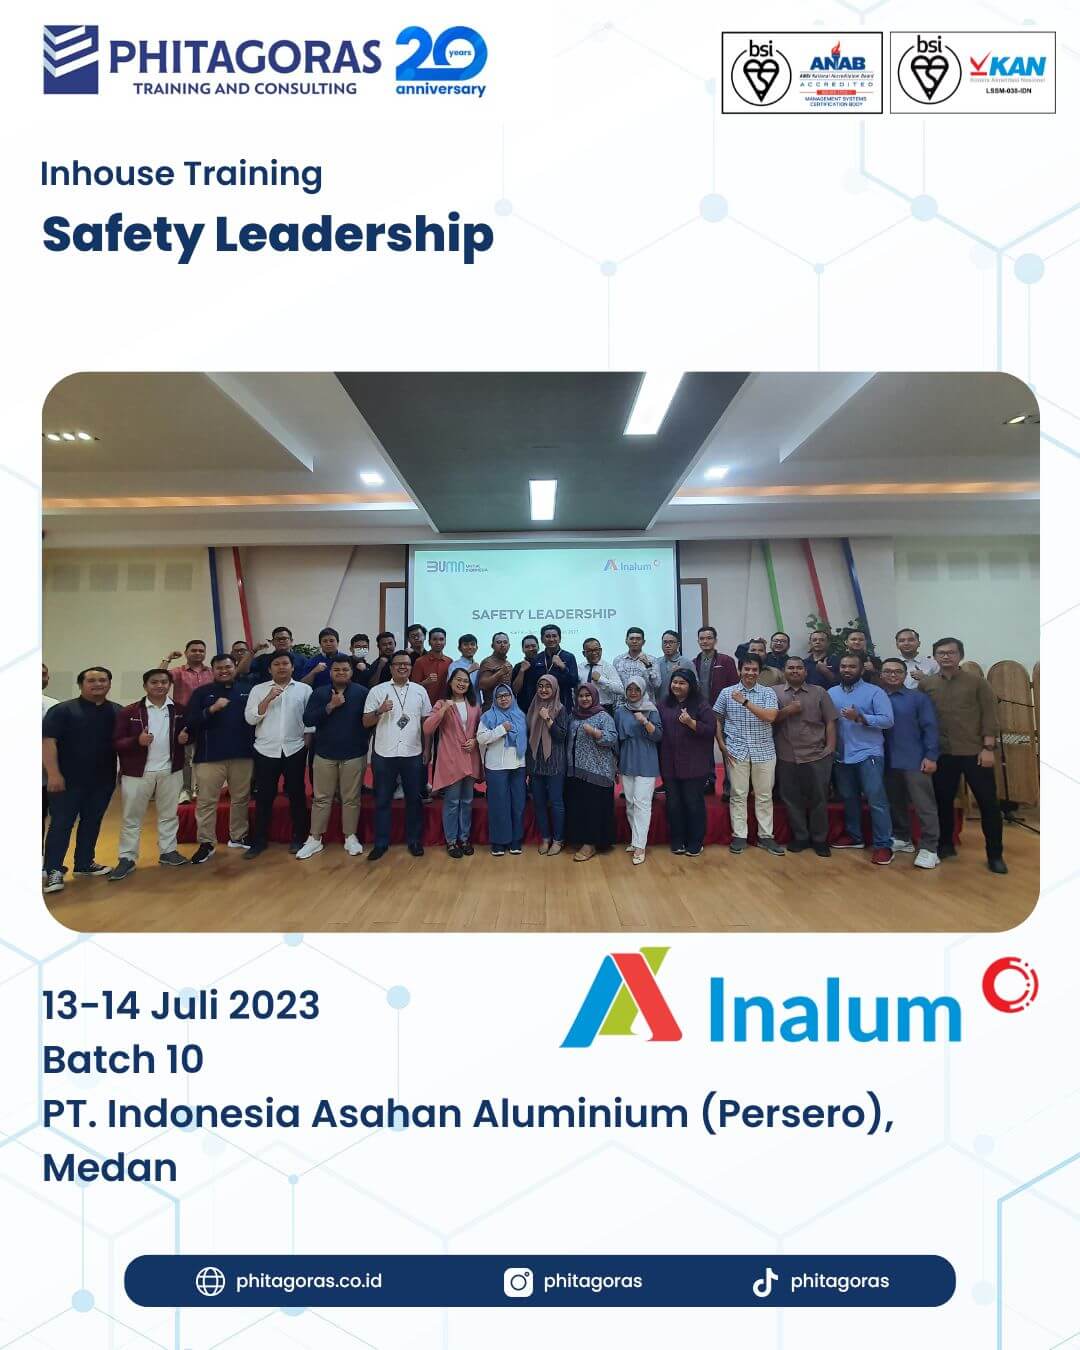 Inhouse Training Safety Leadership - PT. Indonesia Asahan Aluminium (Persero) Batch 10